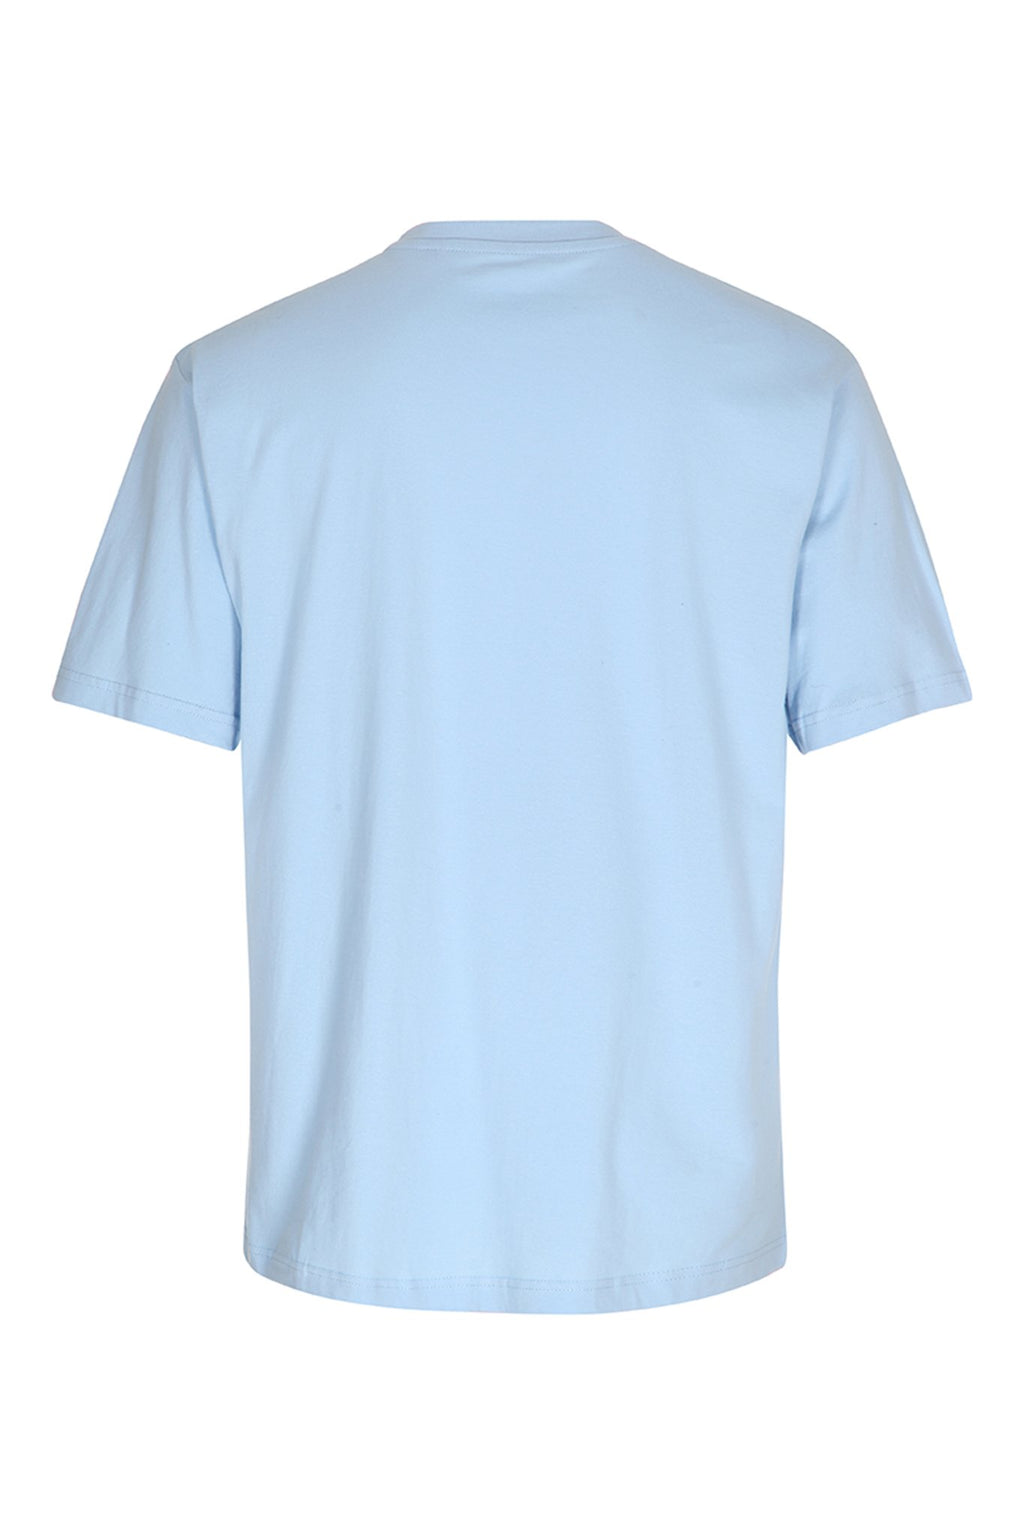 Camiseta básica para niños - azul claro